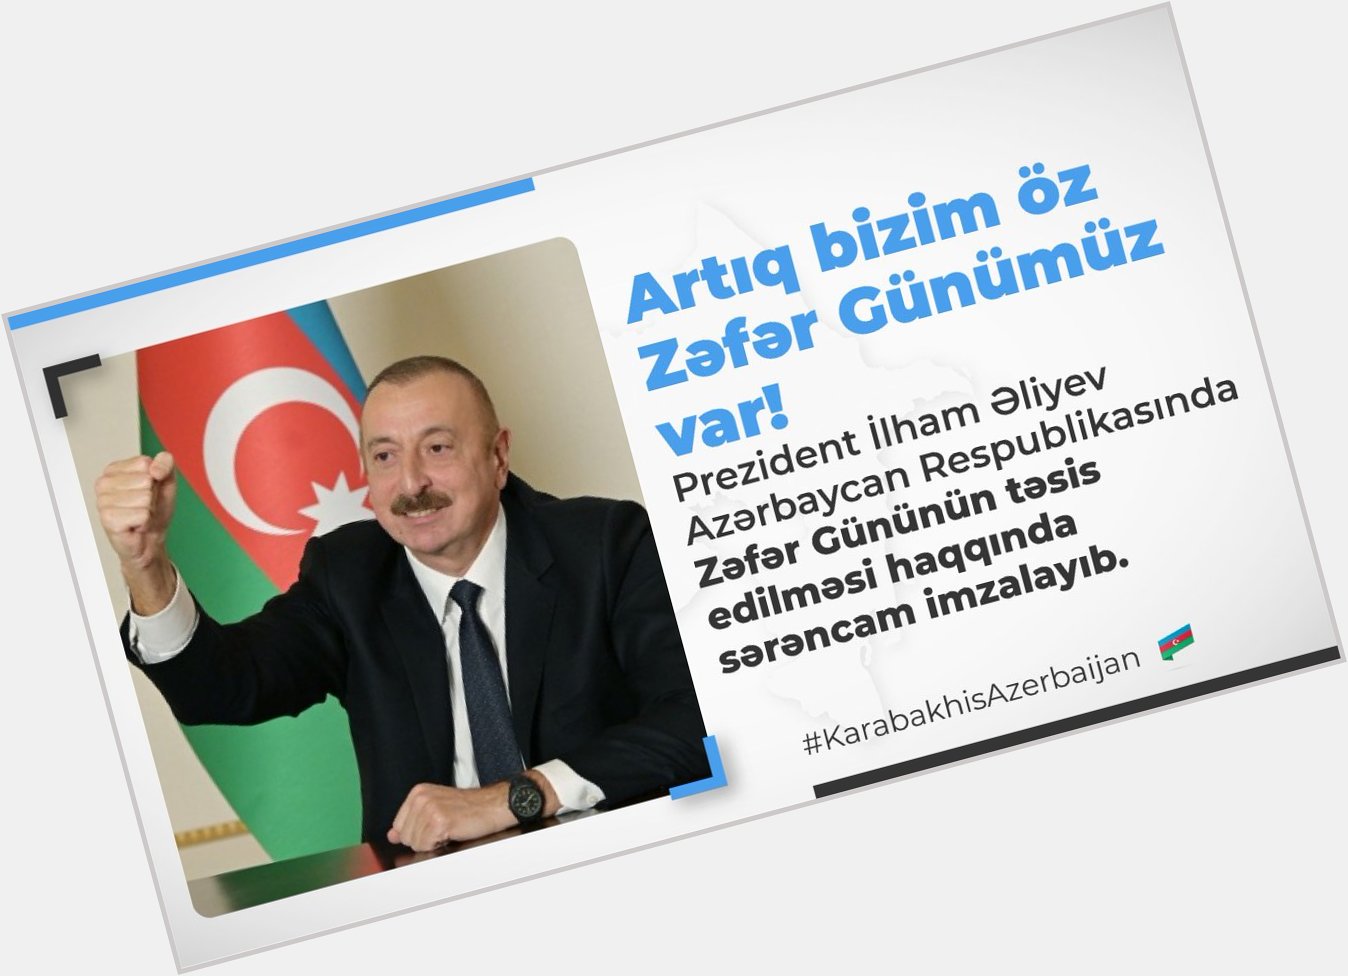 Happy birthday, Glorious Commander-in-Chief President Ilham Aliyev! 